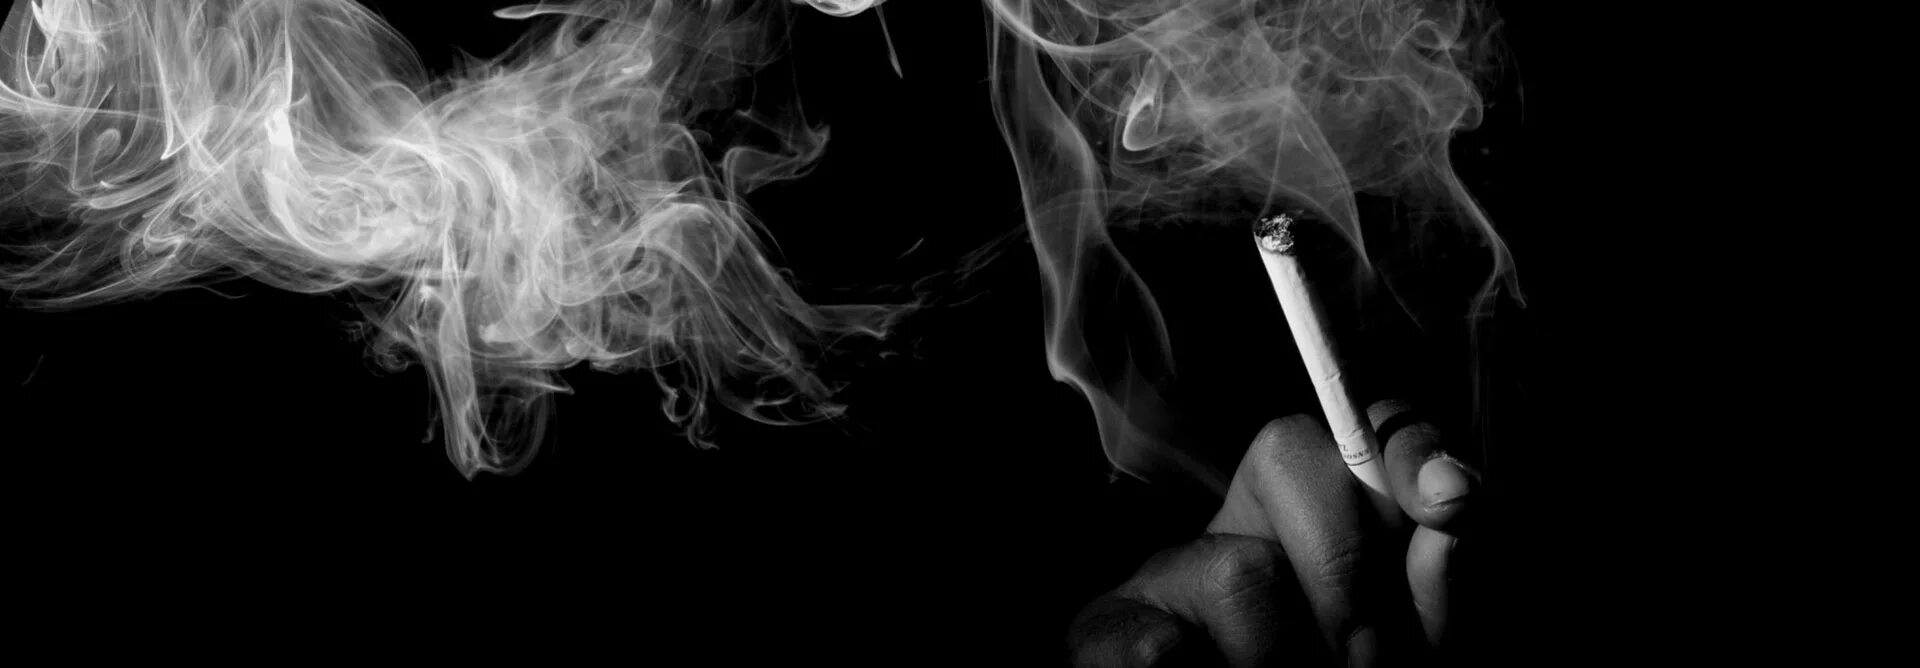 Дым сигарет. Сигаретный дым. Дымок от сигареты. Дымящая сигарета. Дым сигарет минус